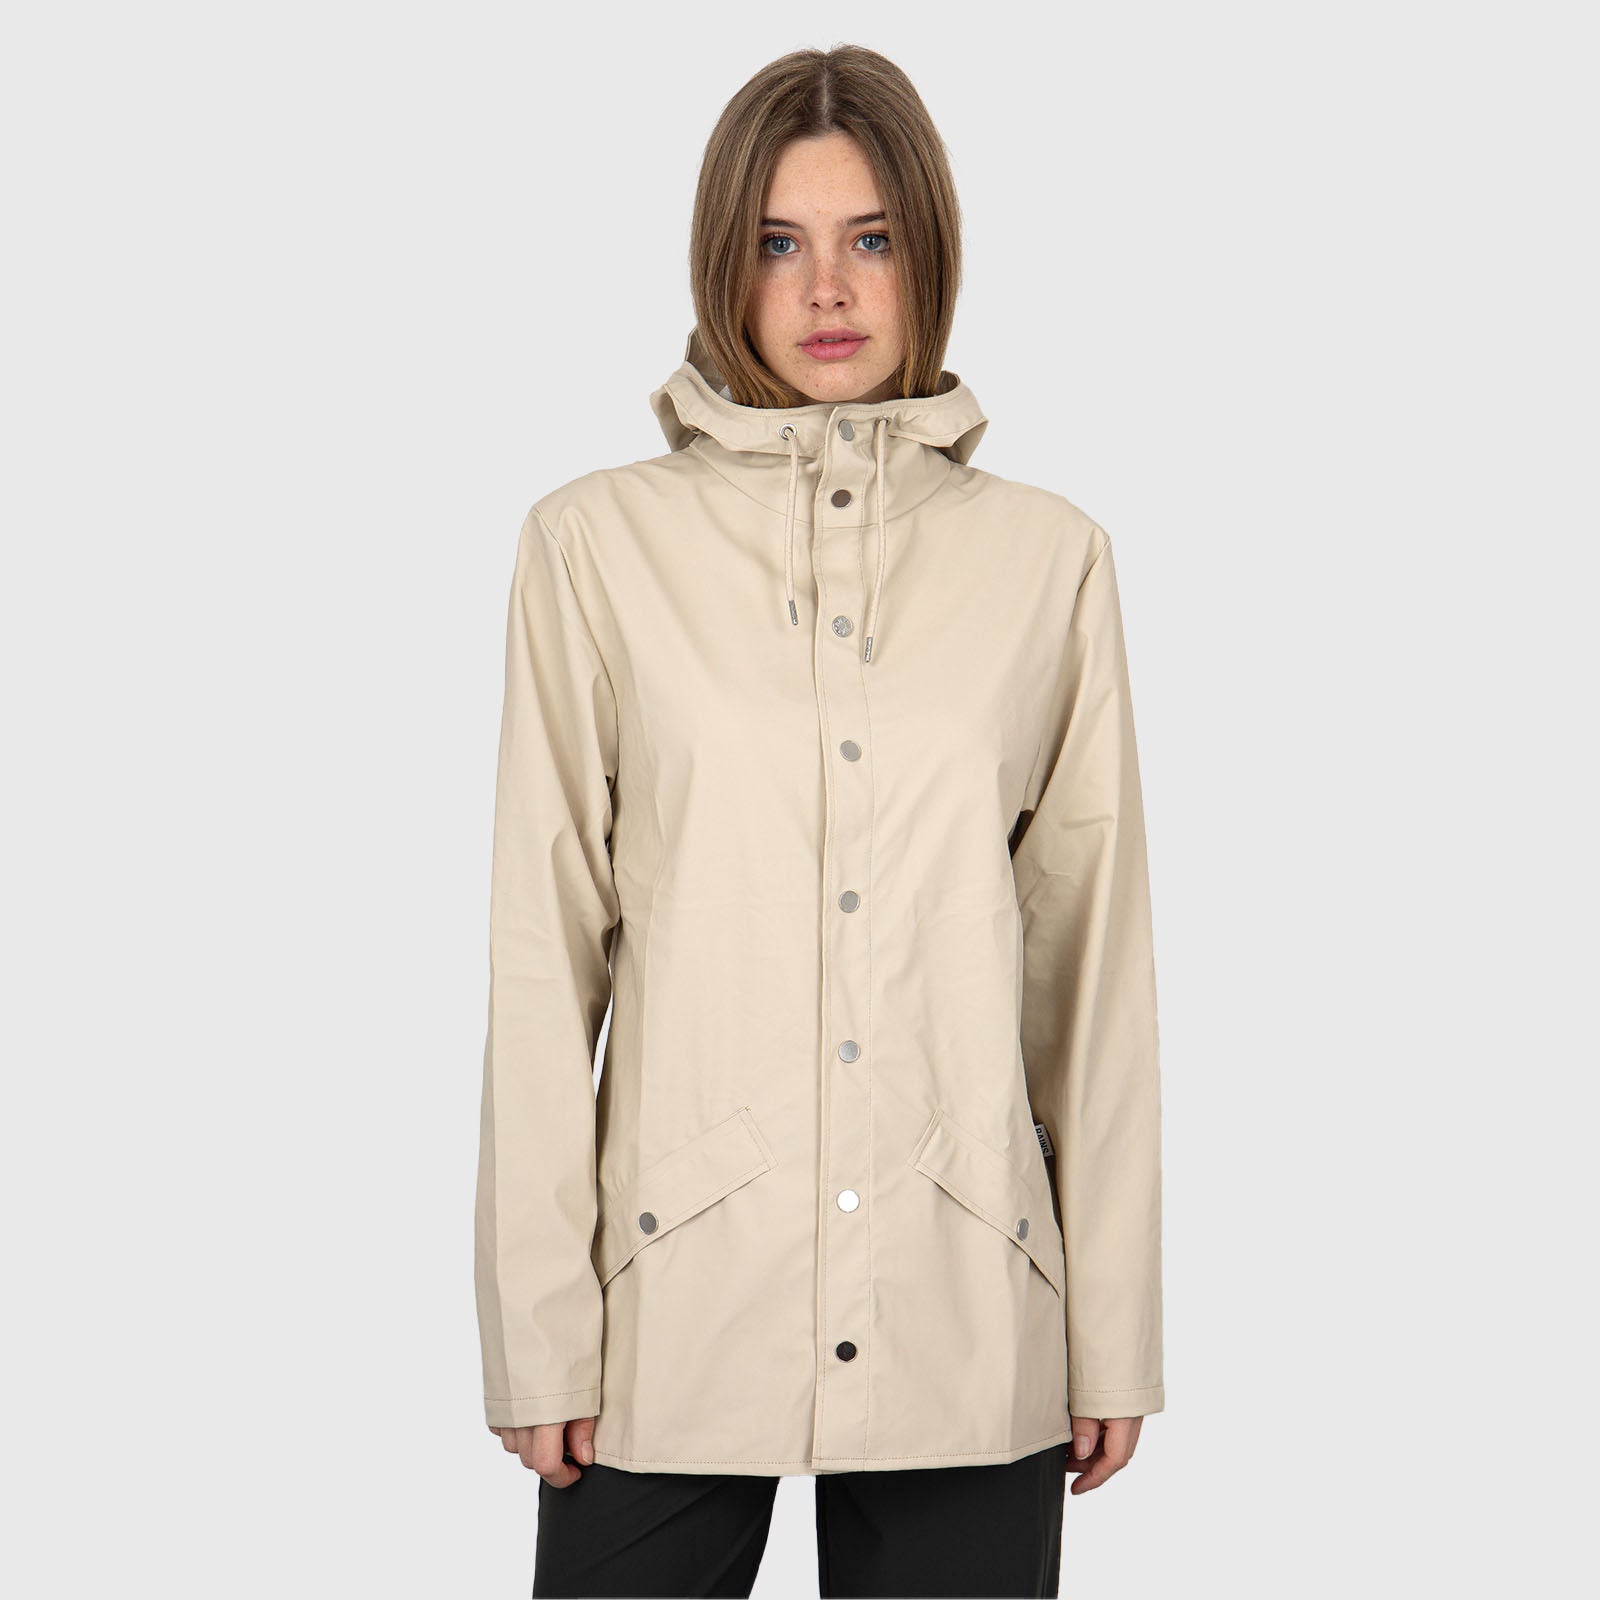 Rains Jacket Synthetic Cream - 6